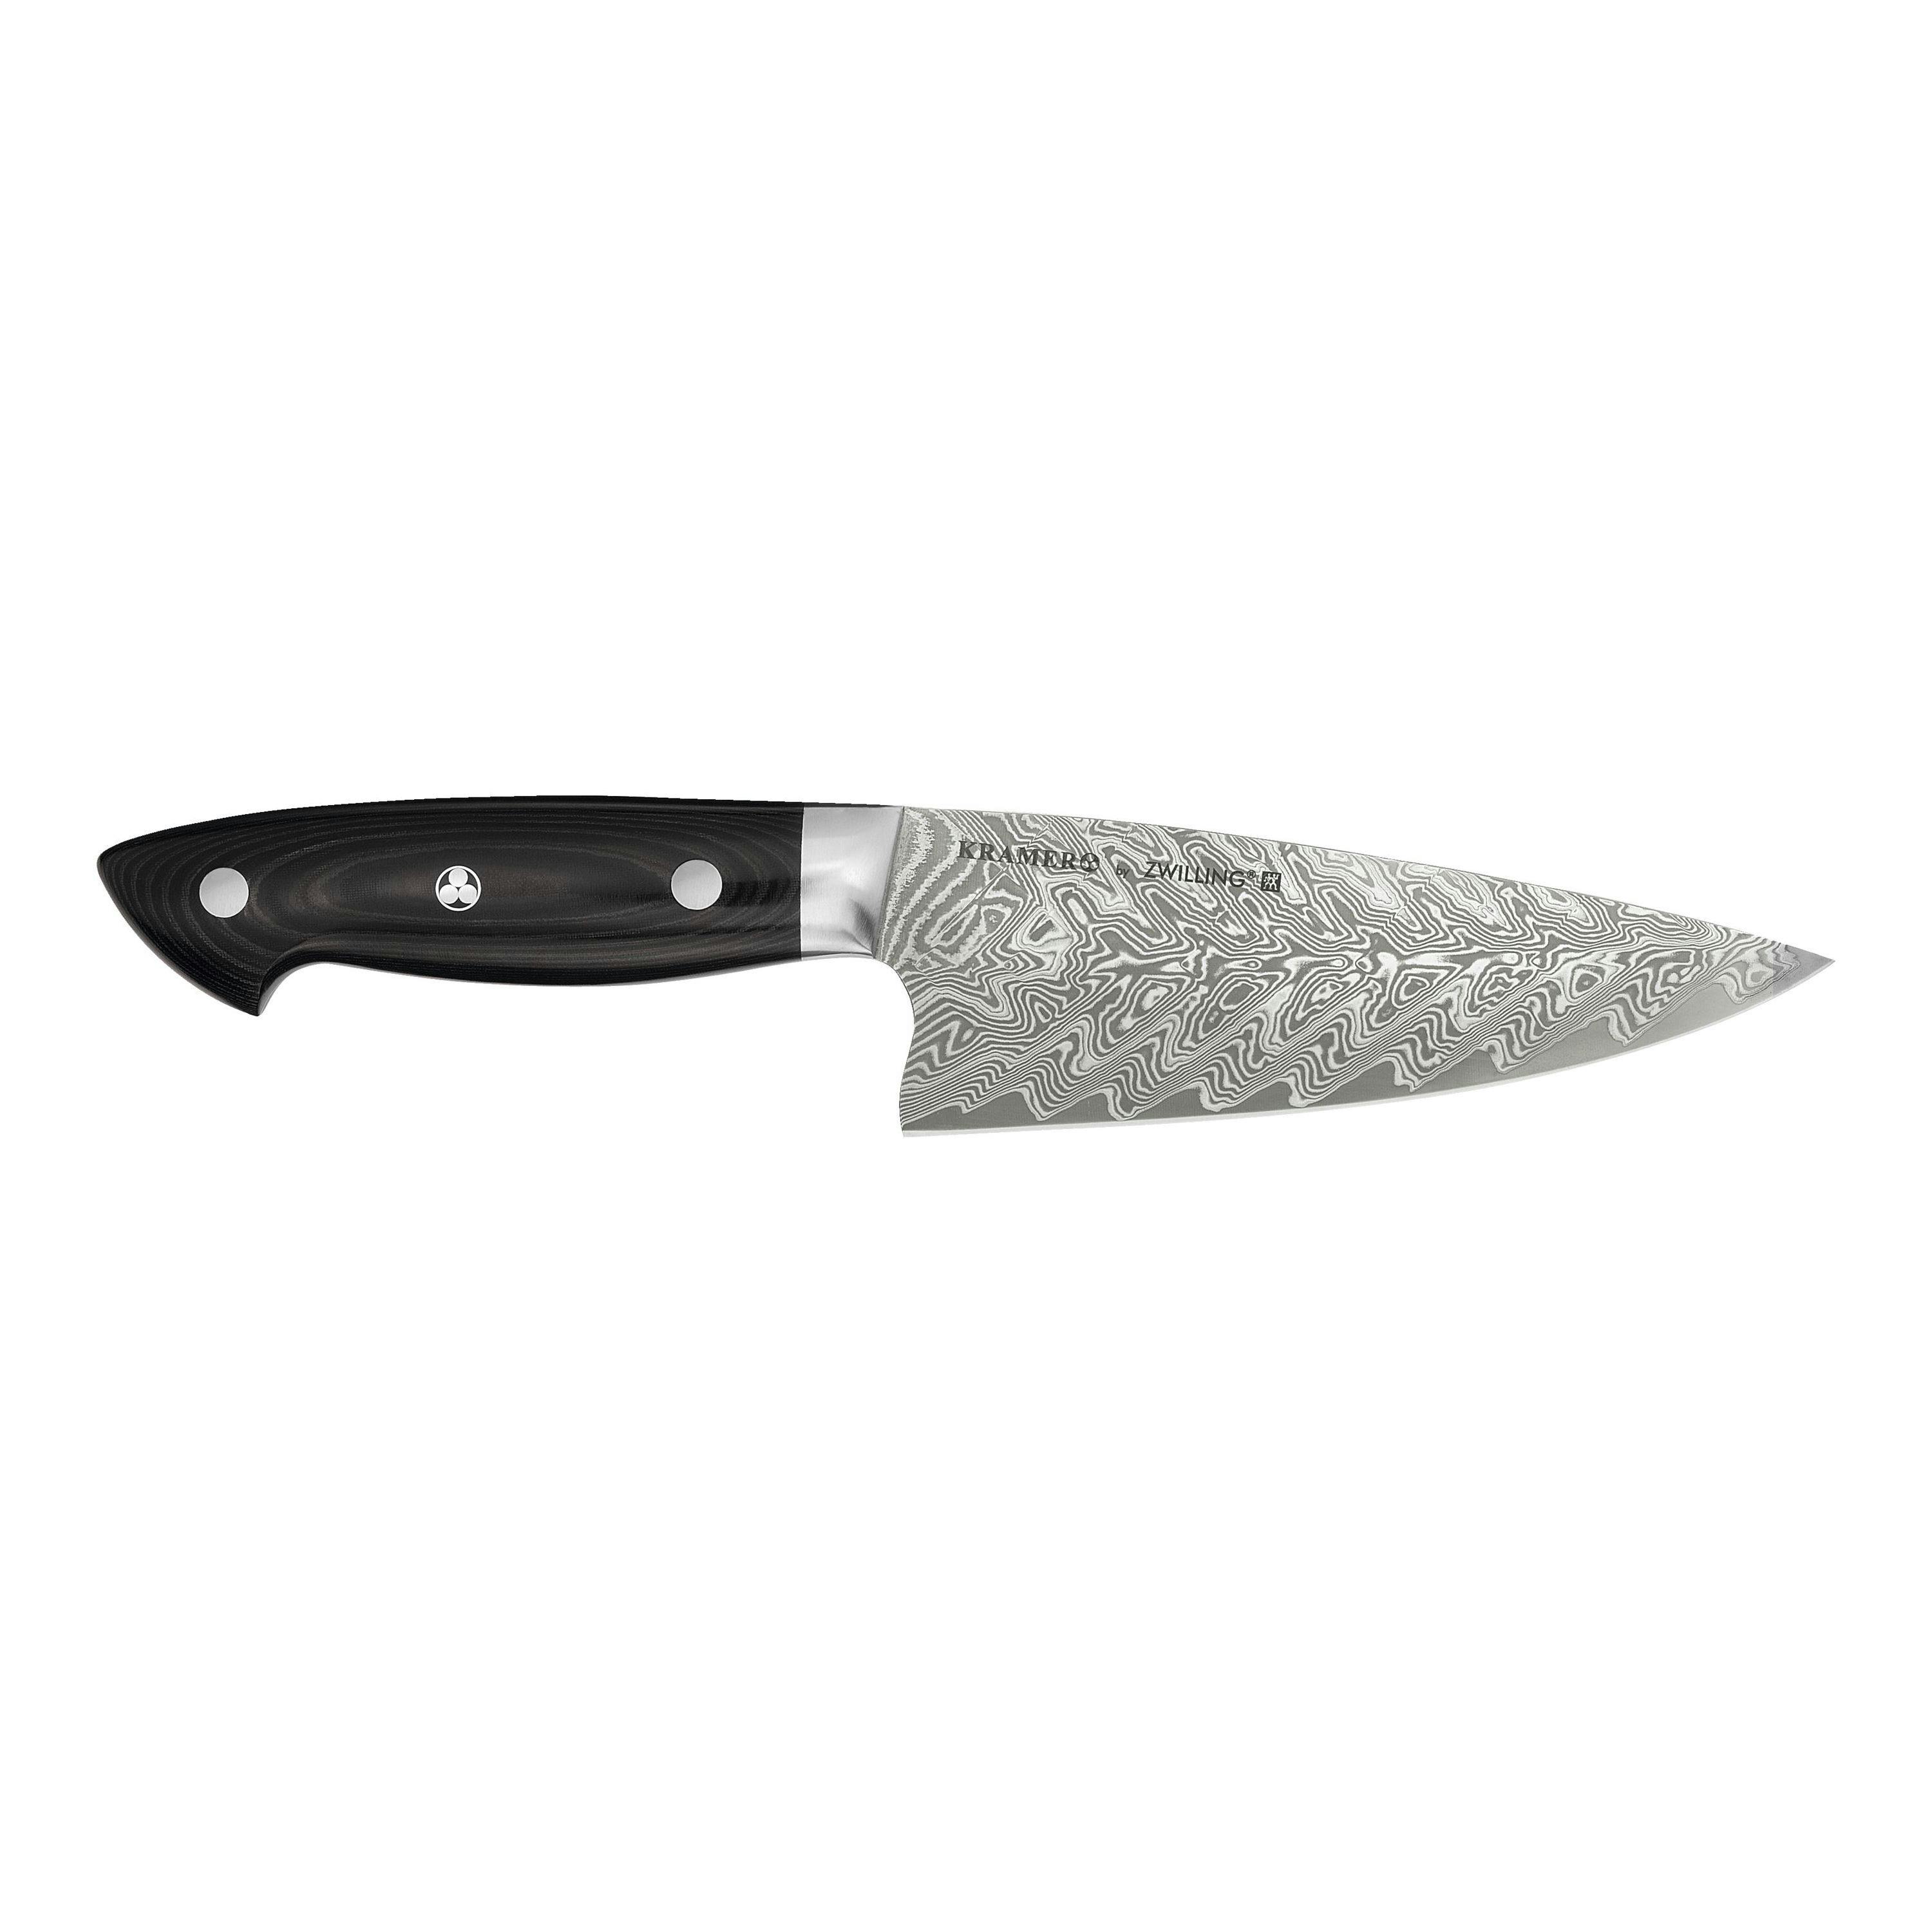 Zwilling Kramer Euroline Damascus Collection 6" Chef's Knife